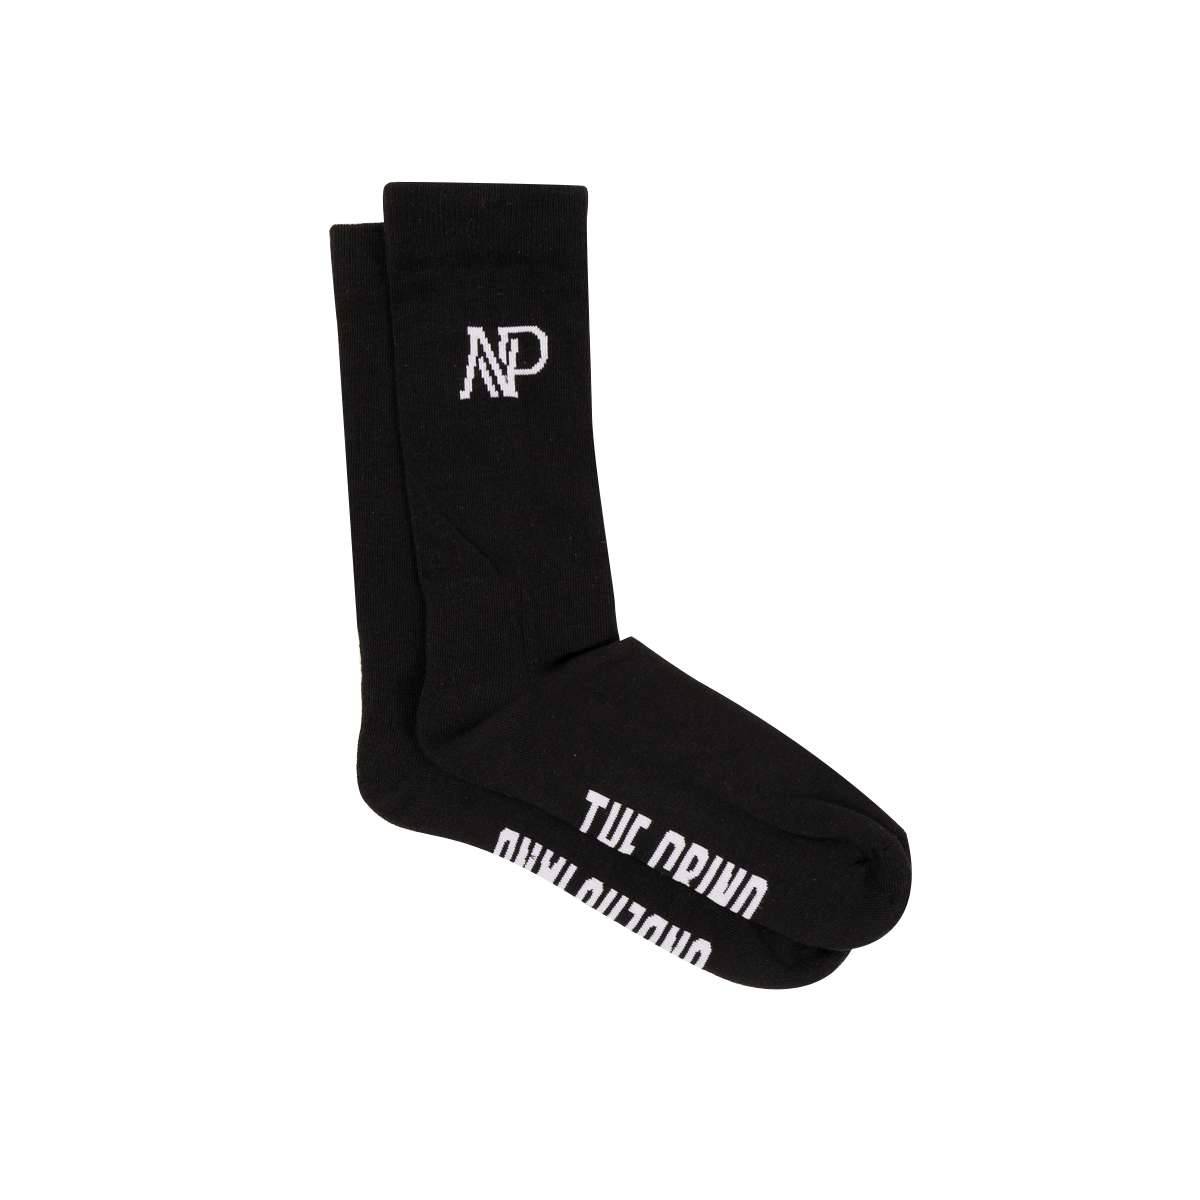 NP Athletic Socks - Black